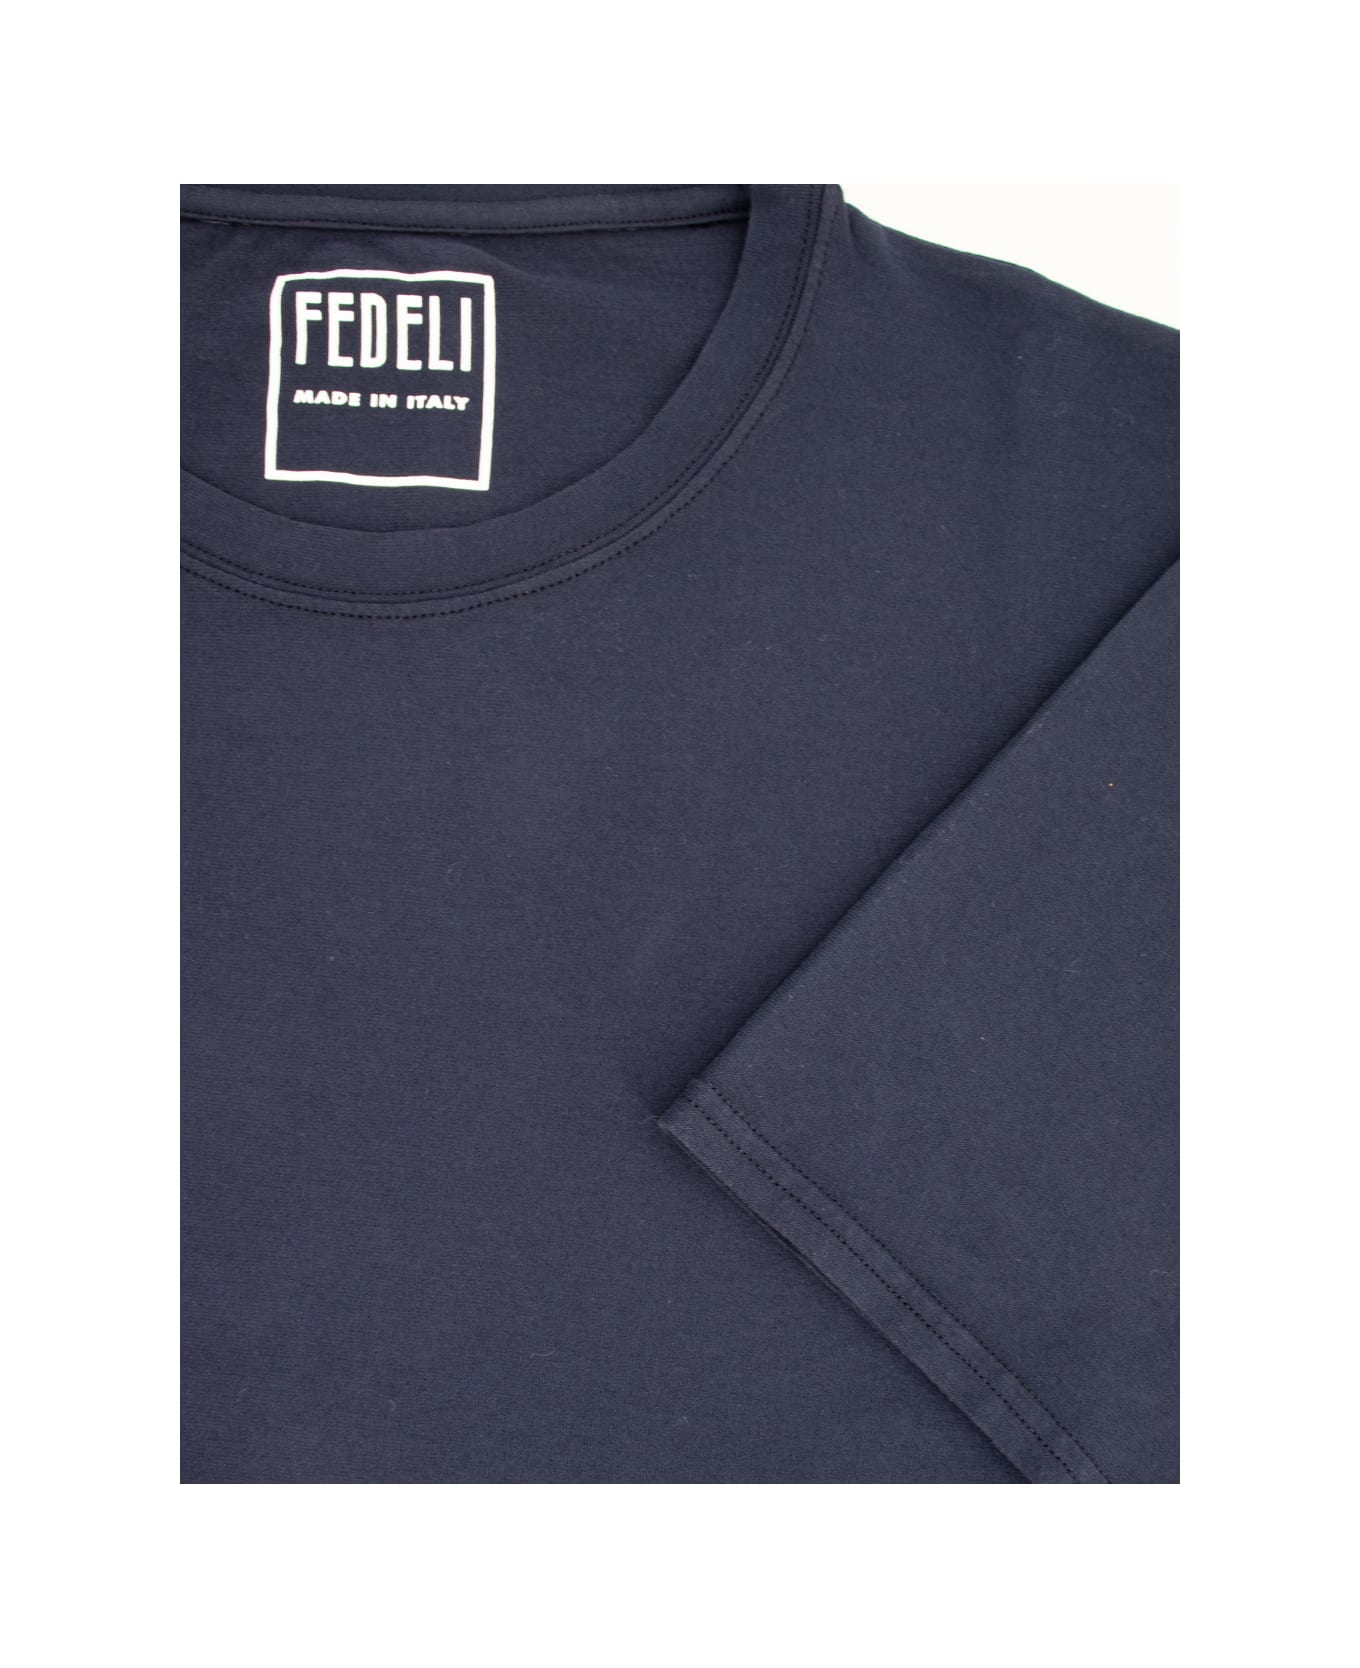 Fedeli T-shirt - 626